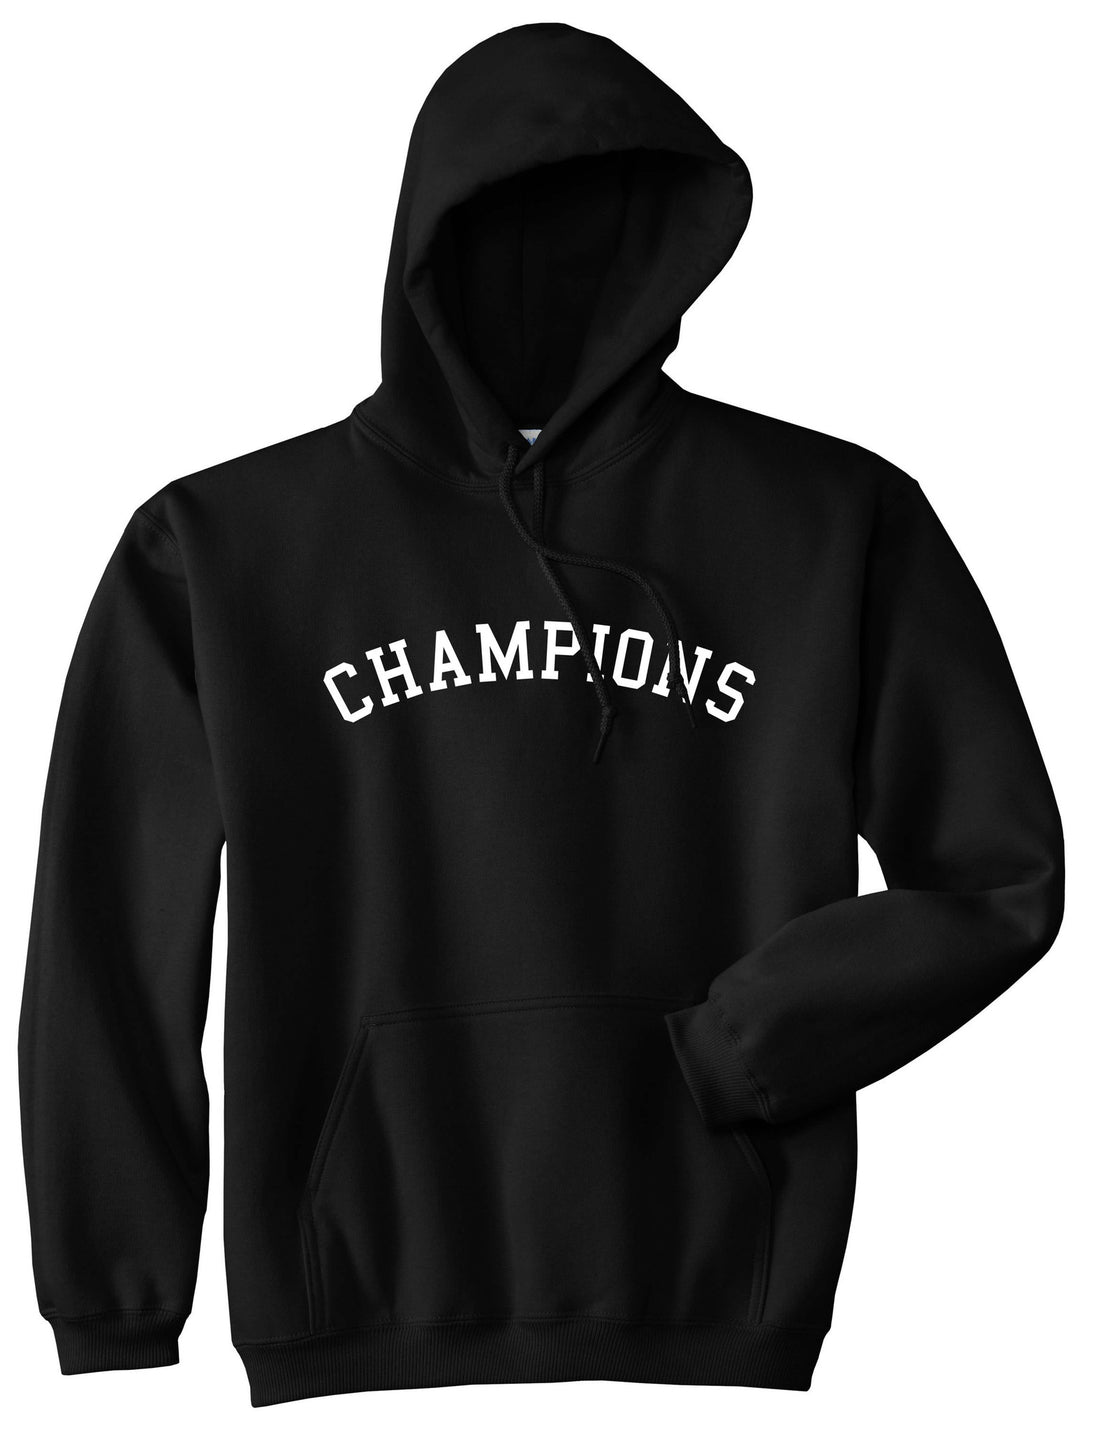 Champions Boys Kids Pullover Hoodie Hoody in Black by Kings Of NY